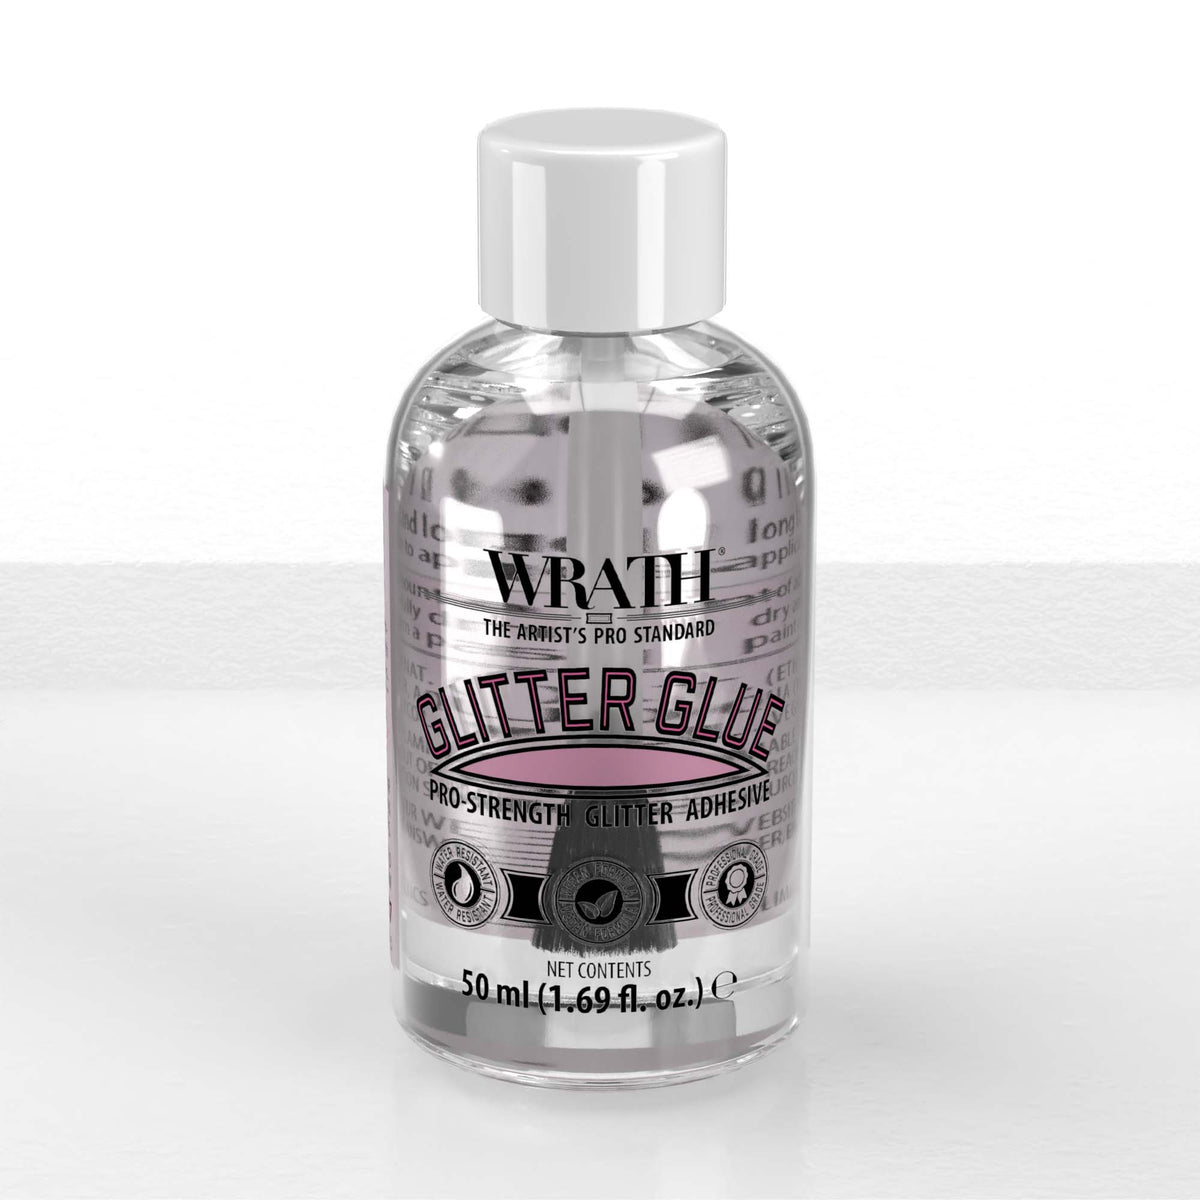 WRATH Glitter Glue - Pro-Strength Glitter Adhesive